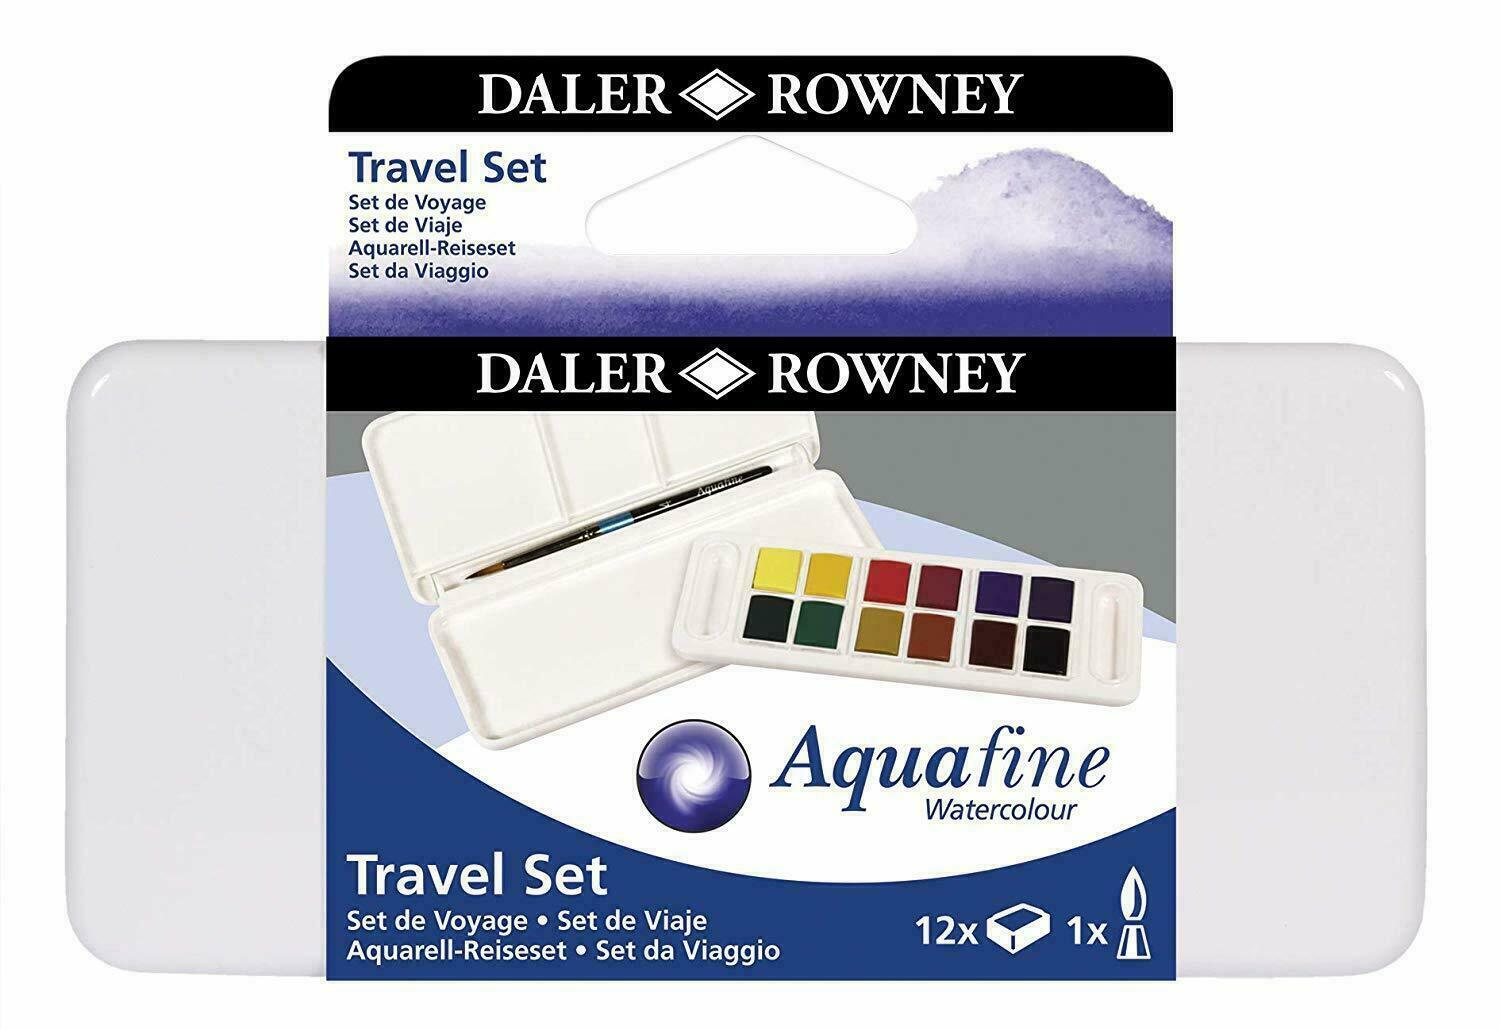 Daler Rowney Aquafine Watercolour 12 Half Pans Travel Set, Assorted,131900001